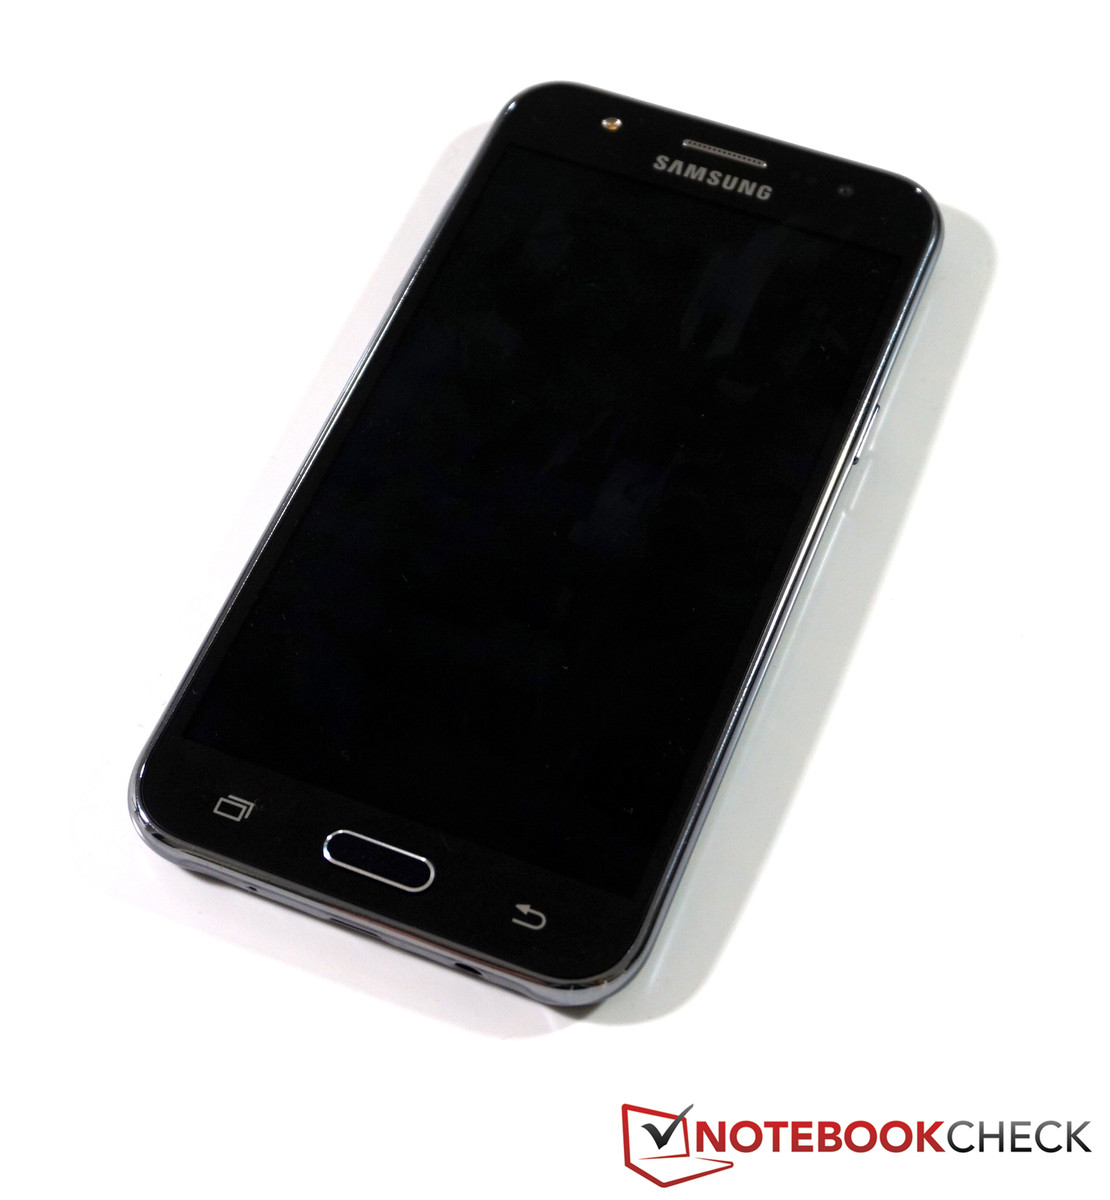 Breve análisis del Smartphone Samsung Galaxy J5 - Notebookcheck.org